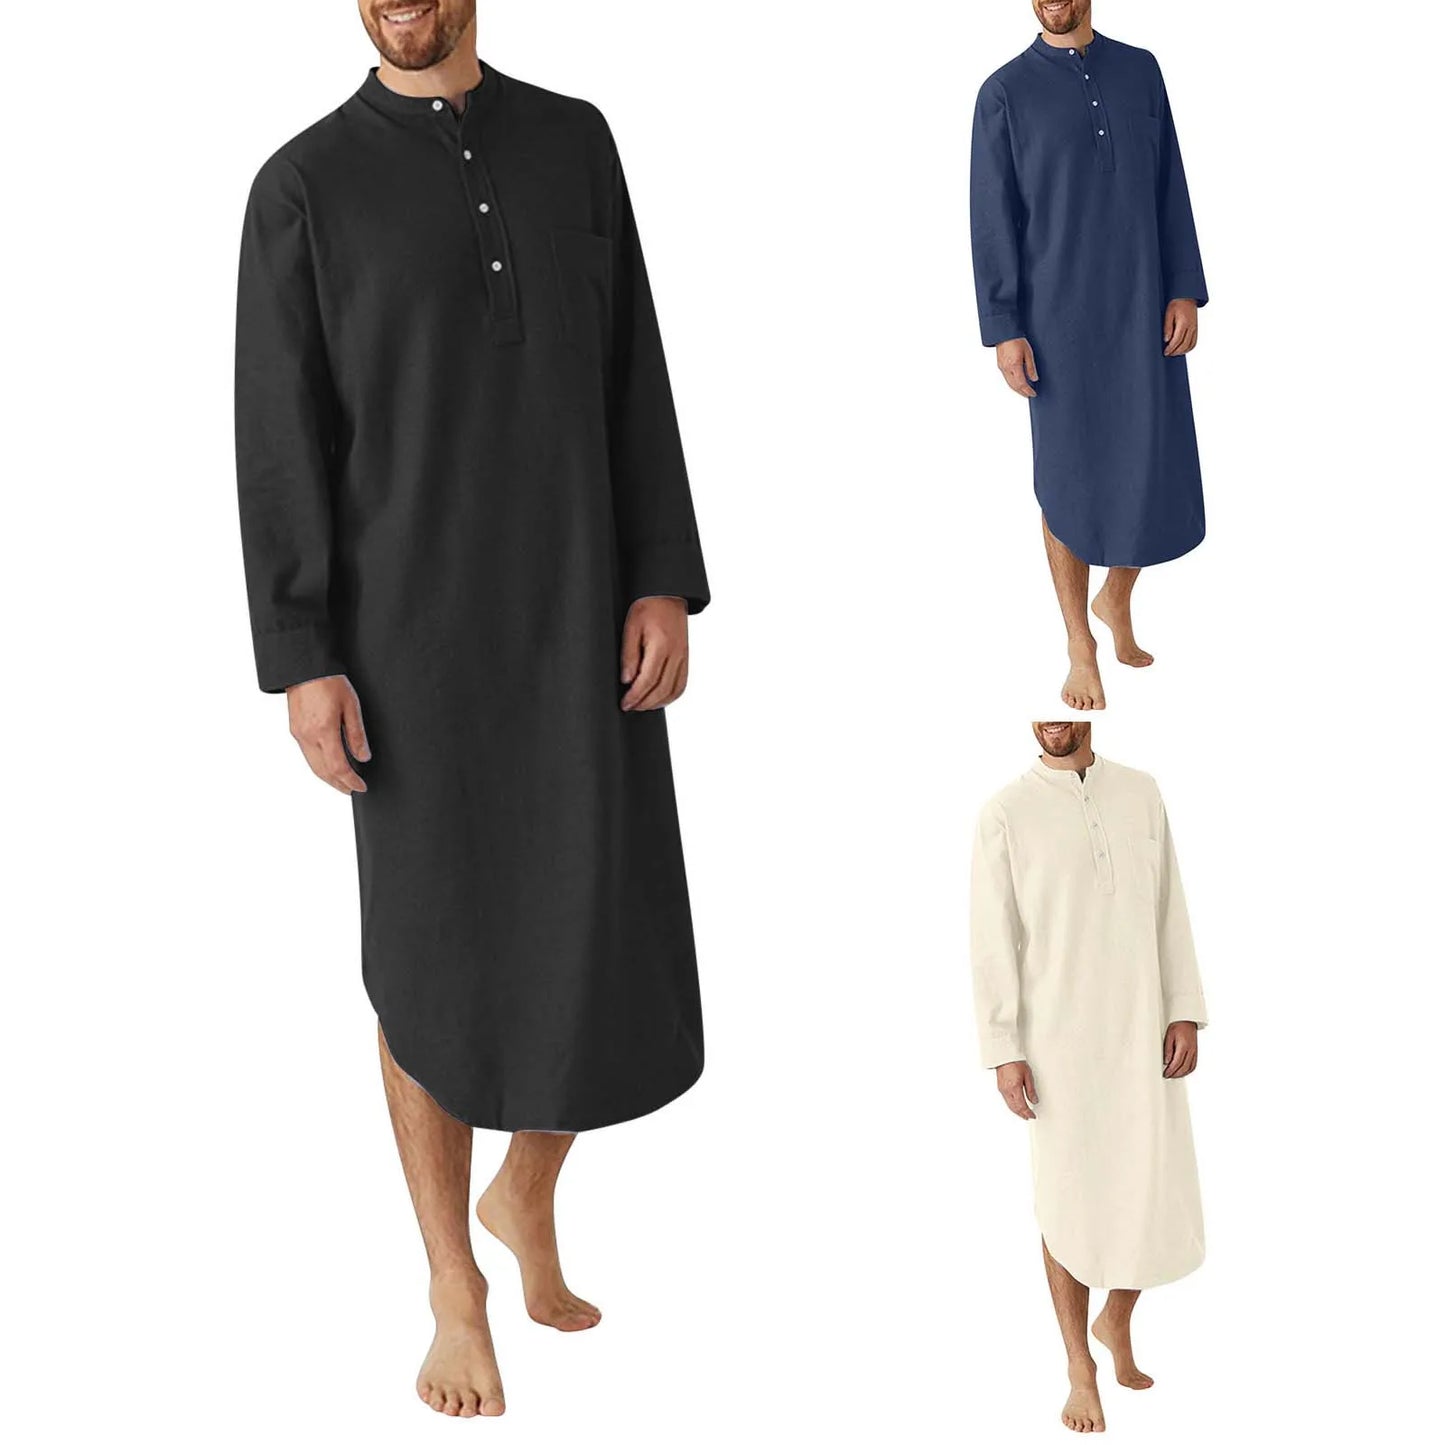 Men's Spring Autumn Arab Long Gown Thobe Robe Shirt Solid Long Sleeve Button Down Muslim Kaftan Burka Dress Loungewear Robes